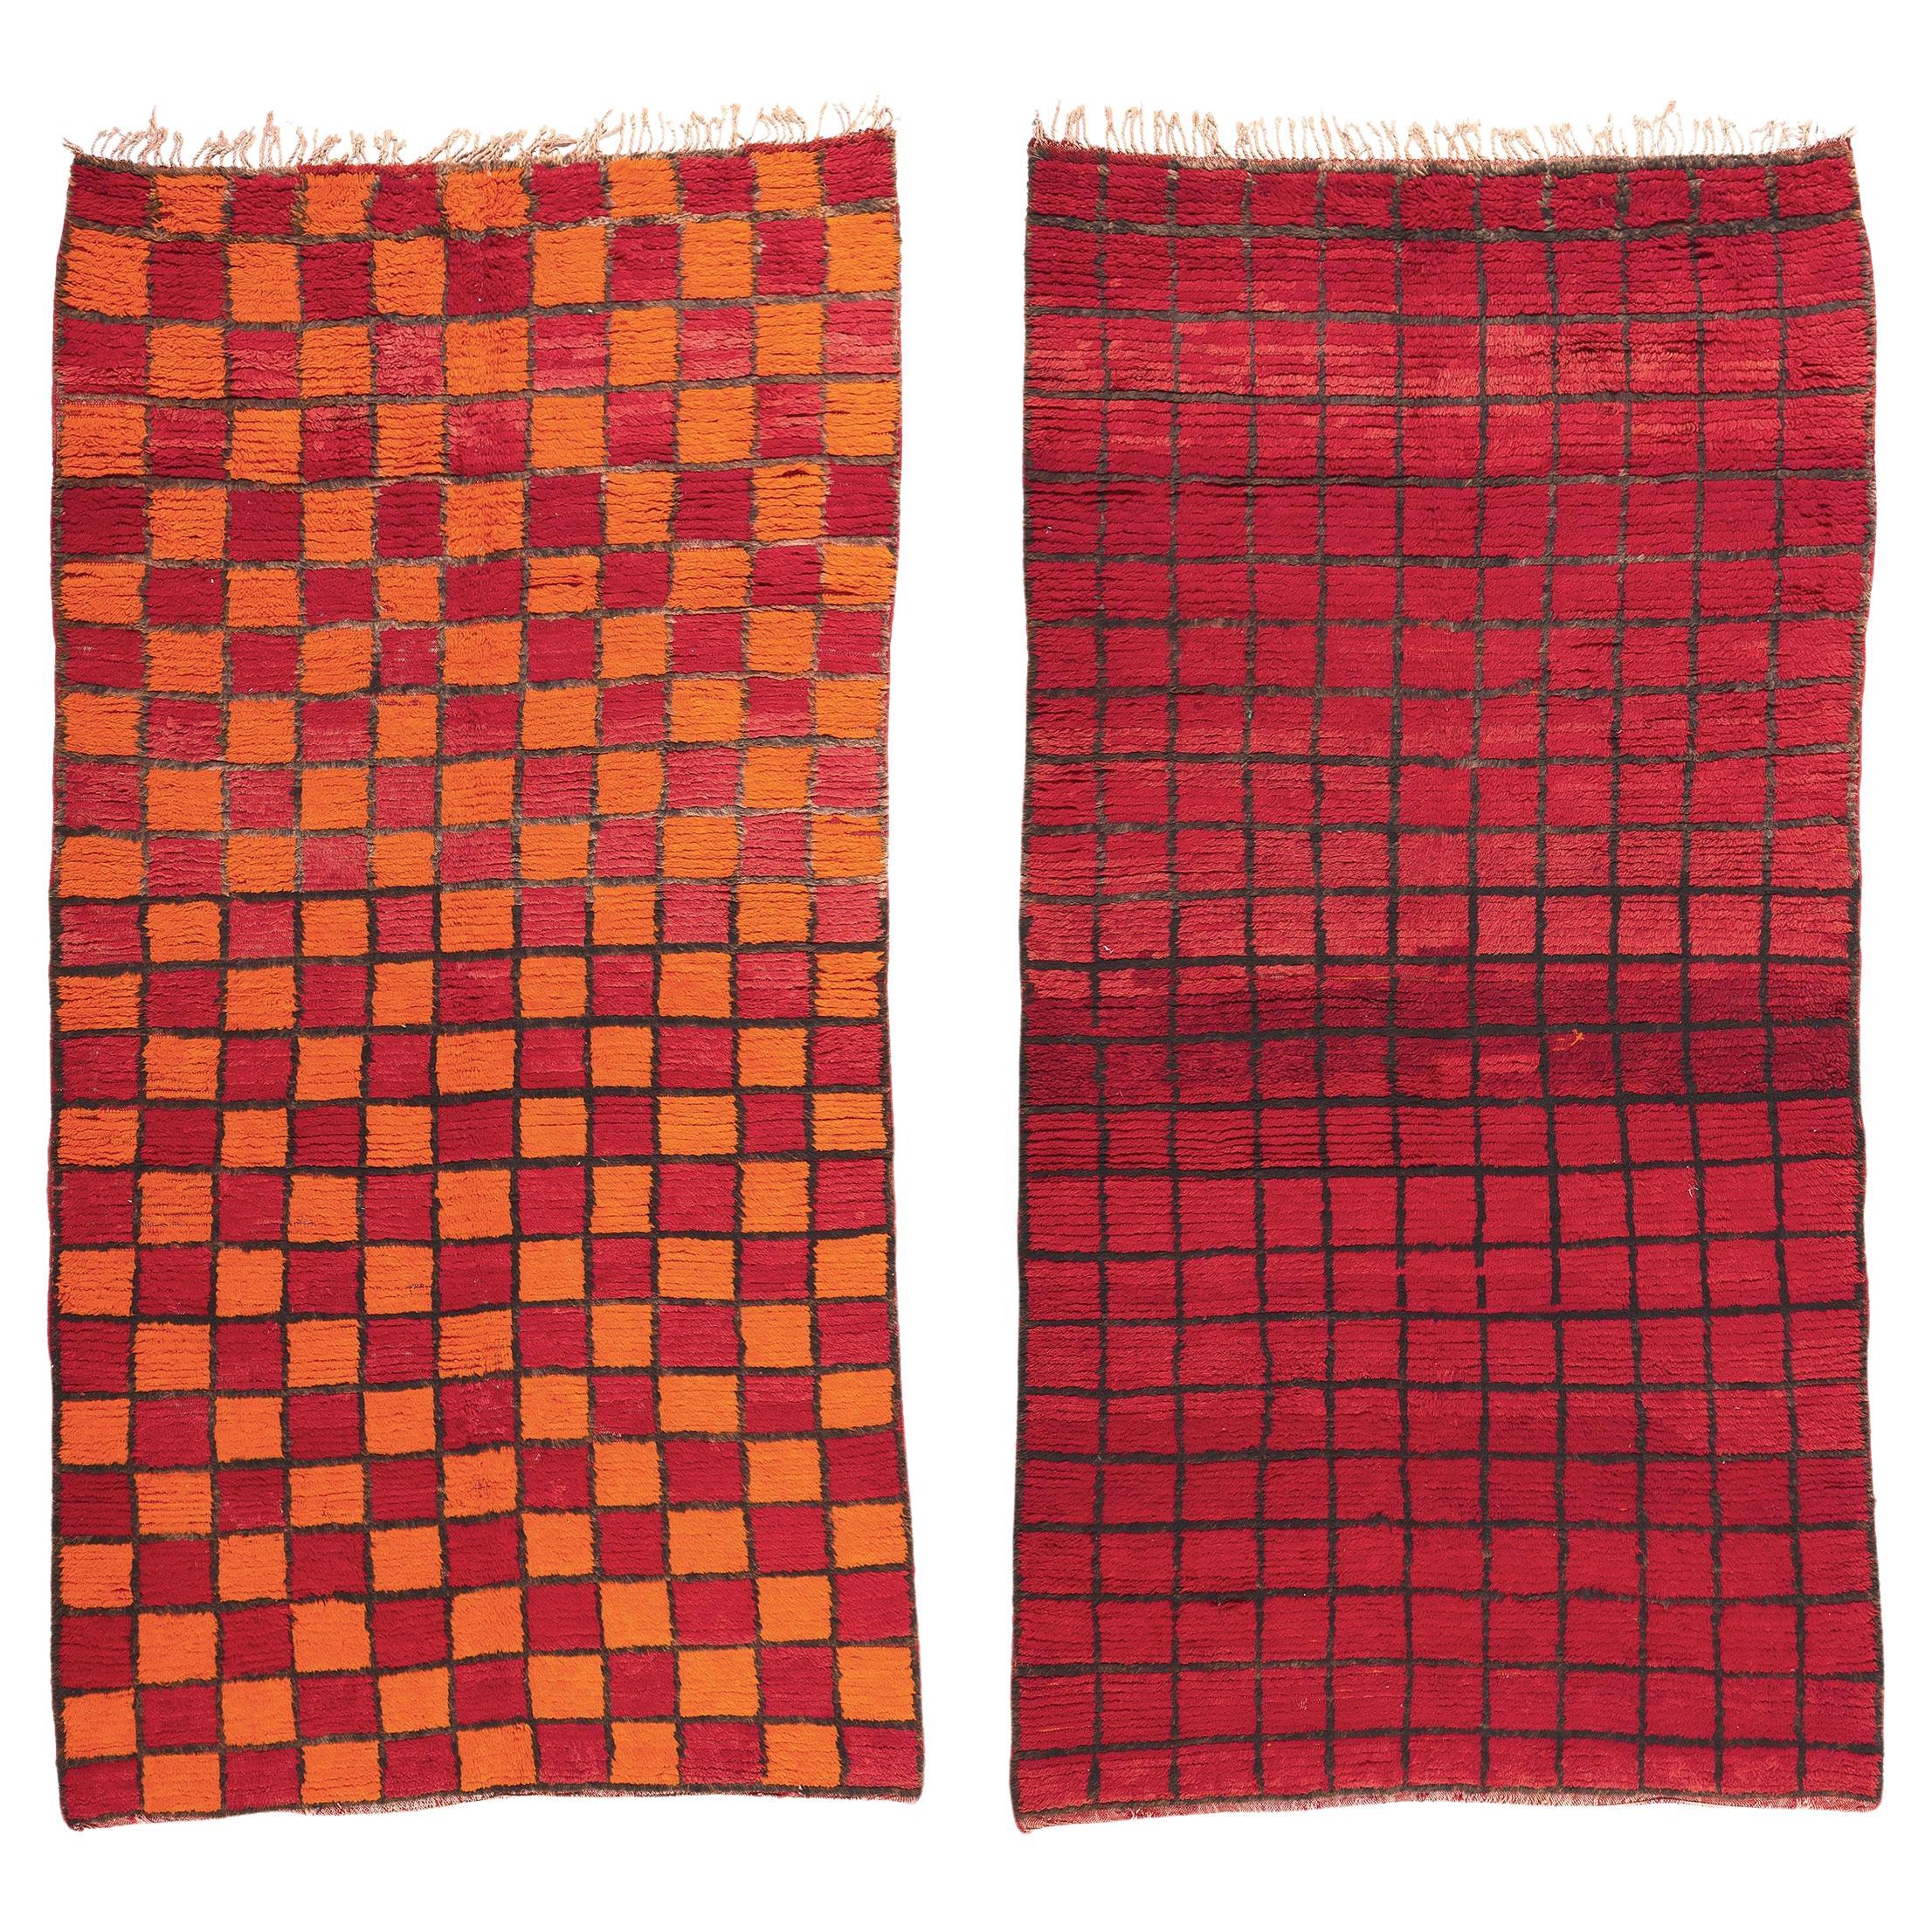 Reversible Vintage Moroccan Rug, Bauhaus Cubism Meets Tribal Enchantment